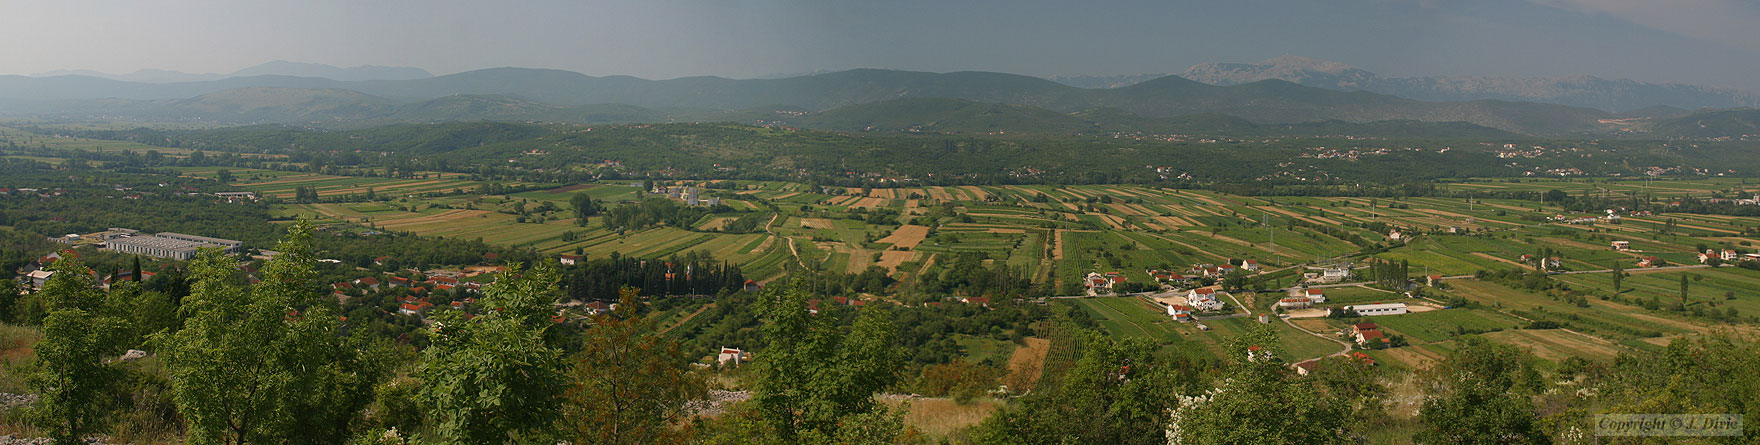 Imotski Valley and Biokovo panorama